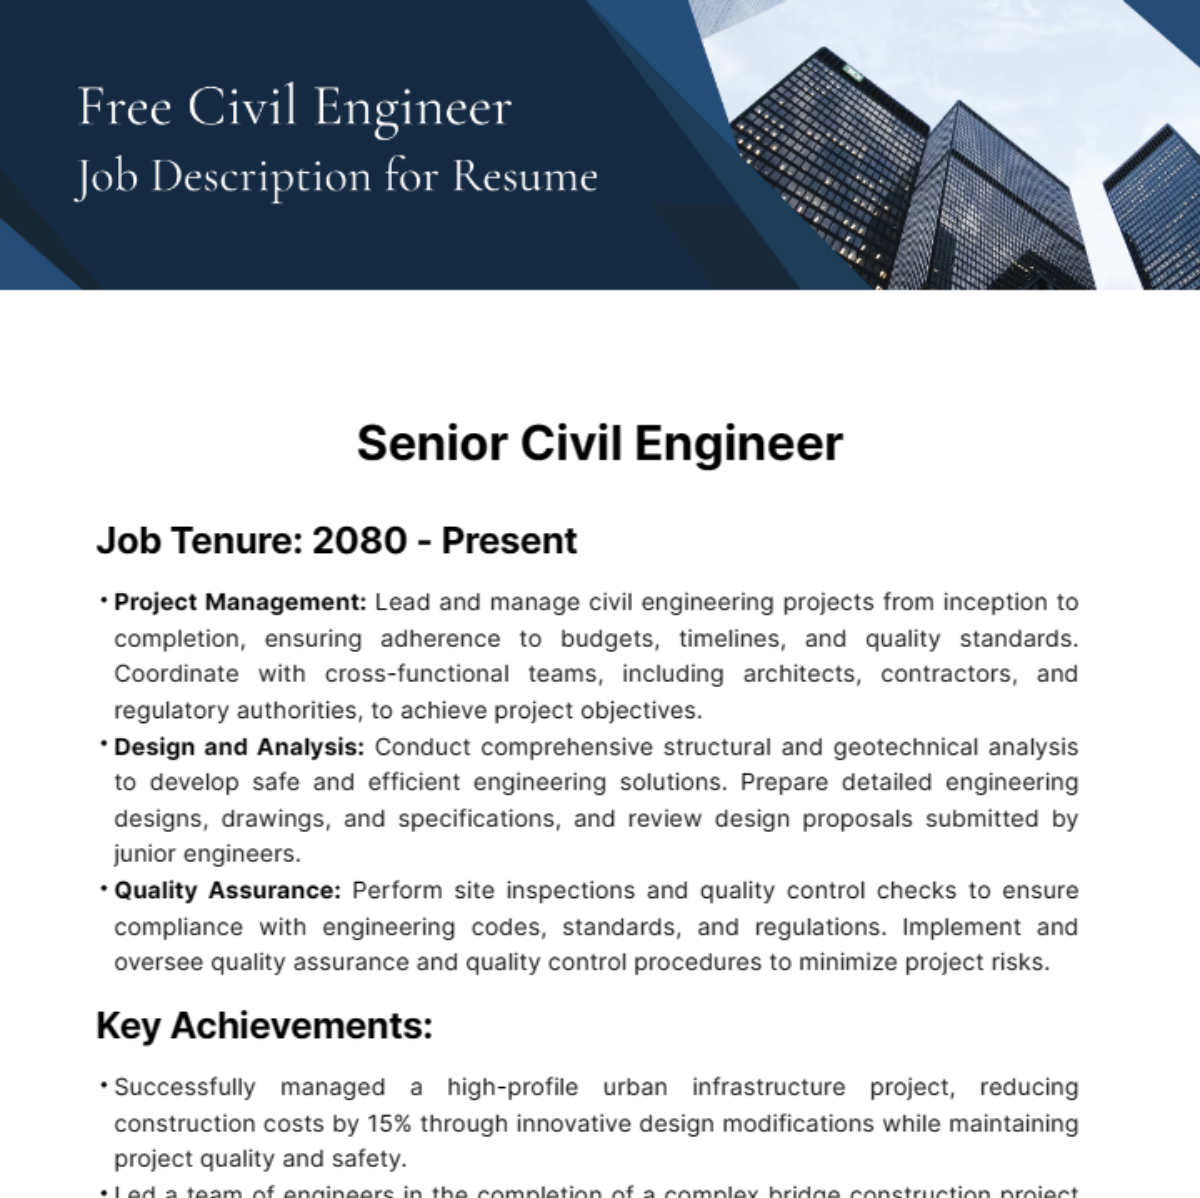 Civil Engineer Job Description for Resume Template